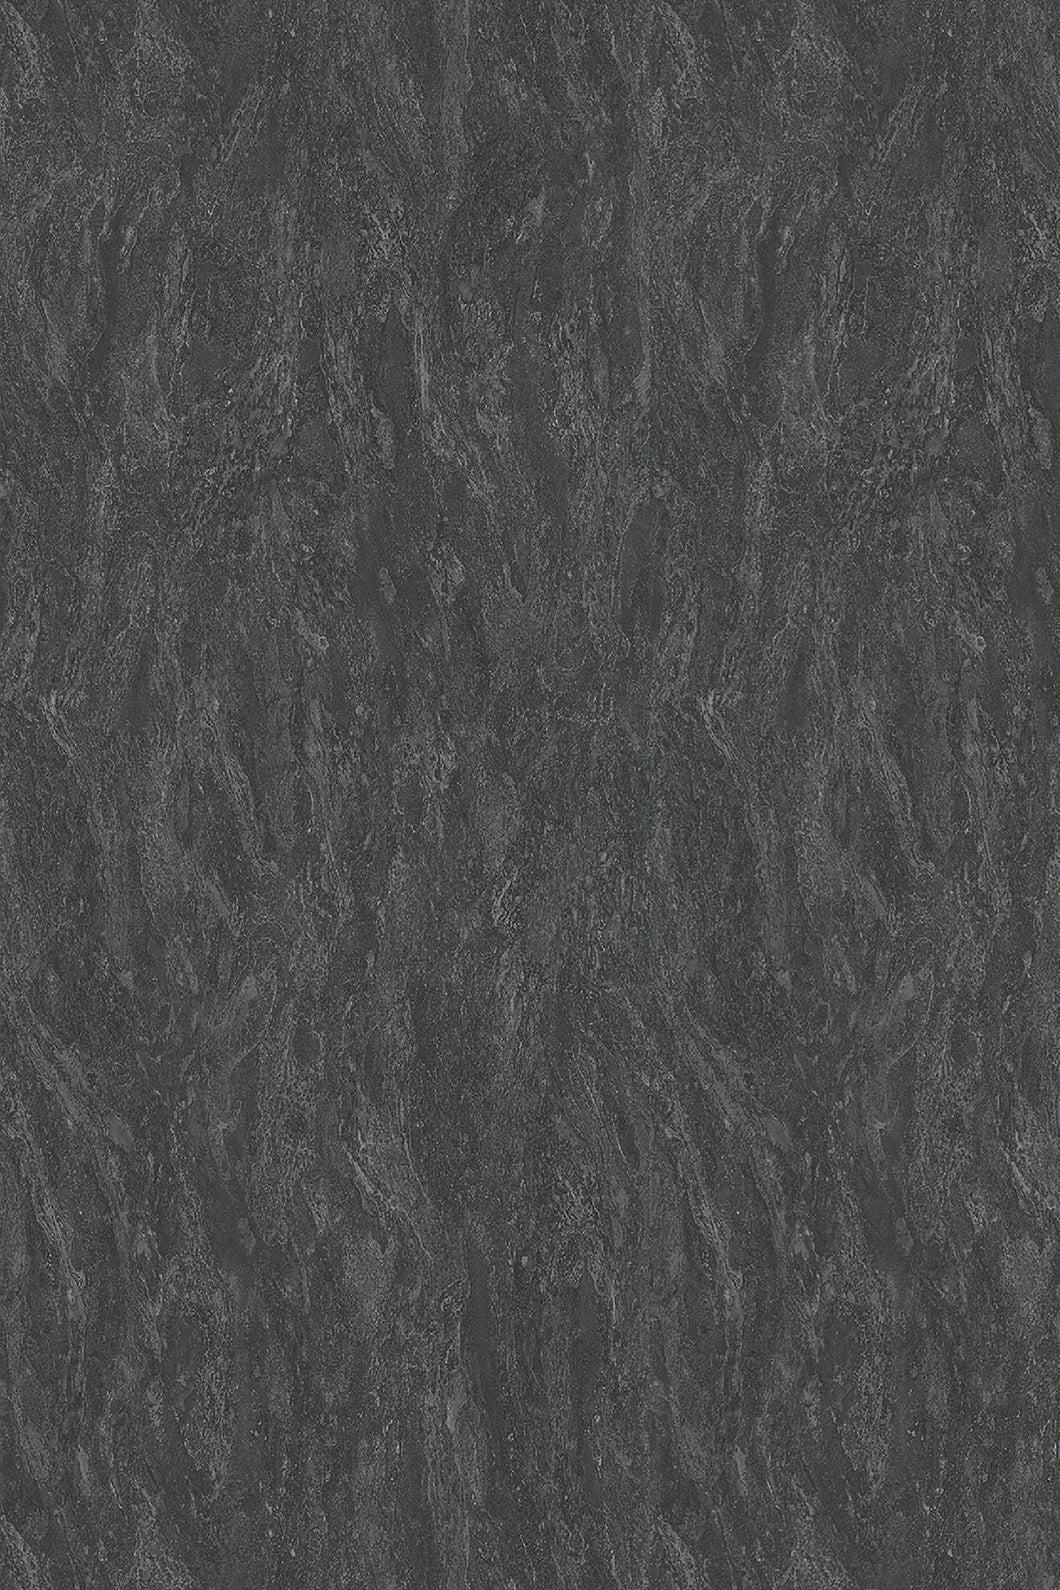 Valore Evora Stone Graphite (Textured)